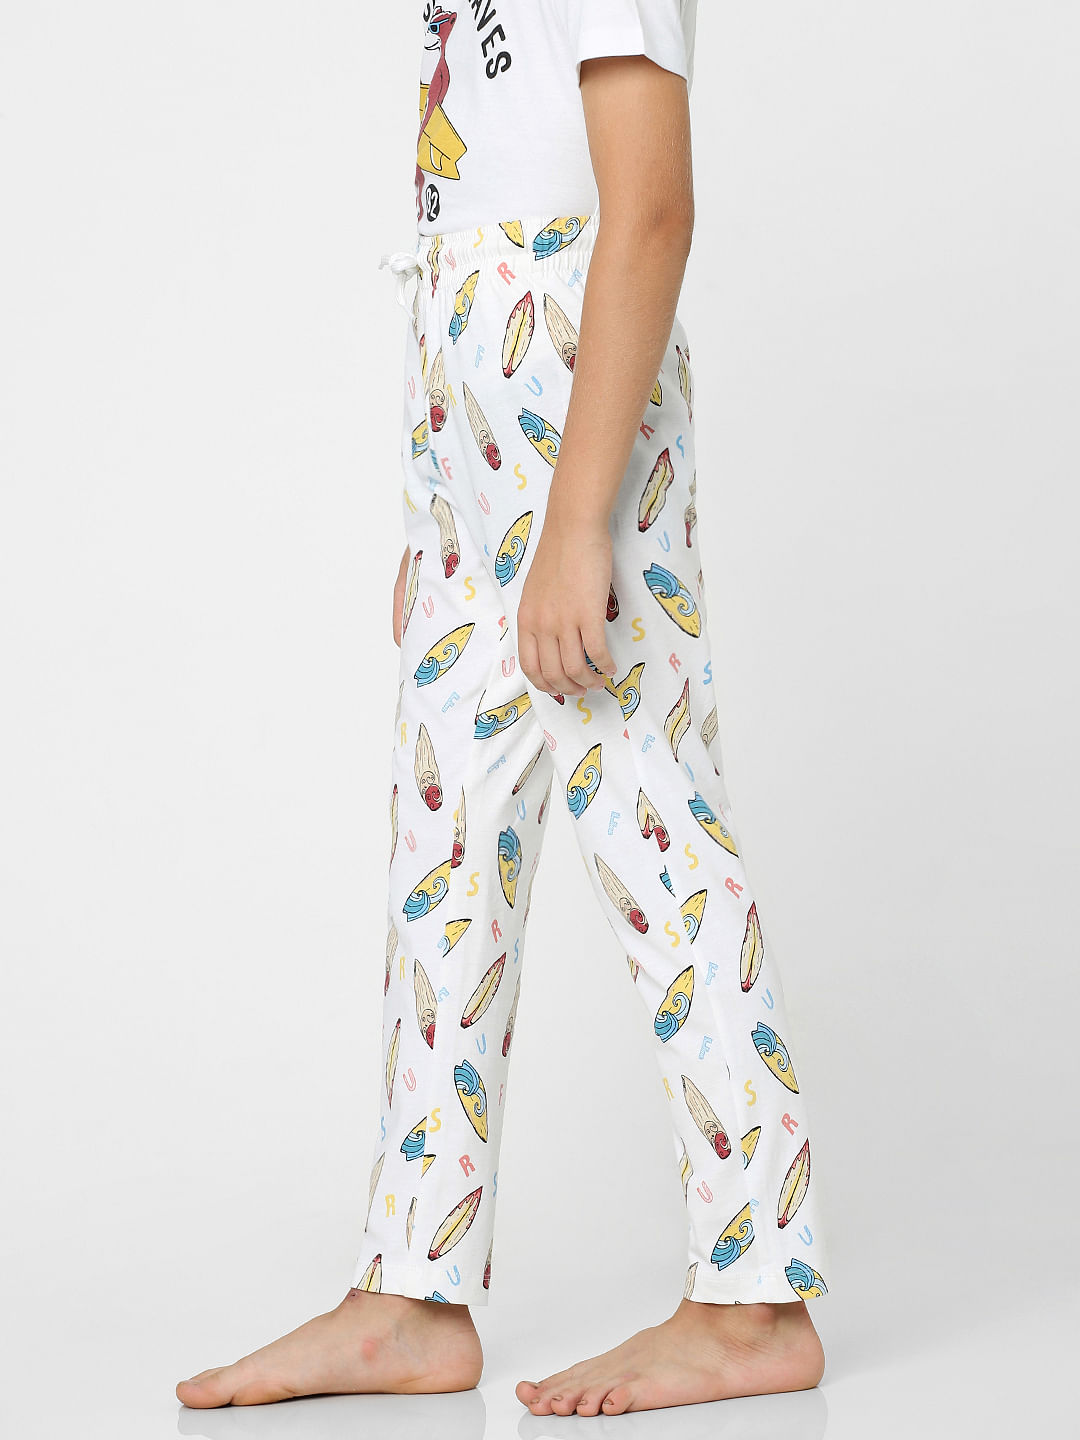 Women's Pajama Pants Cotton Lounge Pants Plaid PJs Bottoms – Latuza